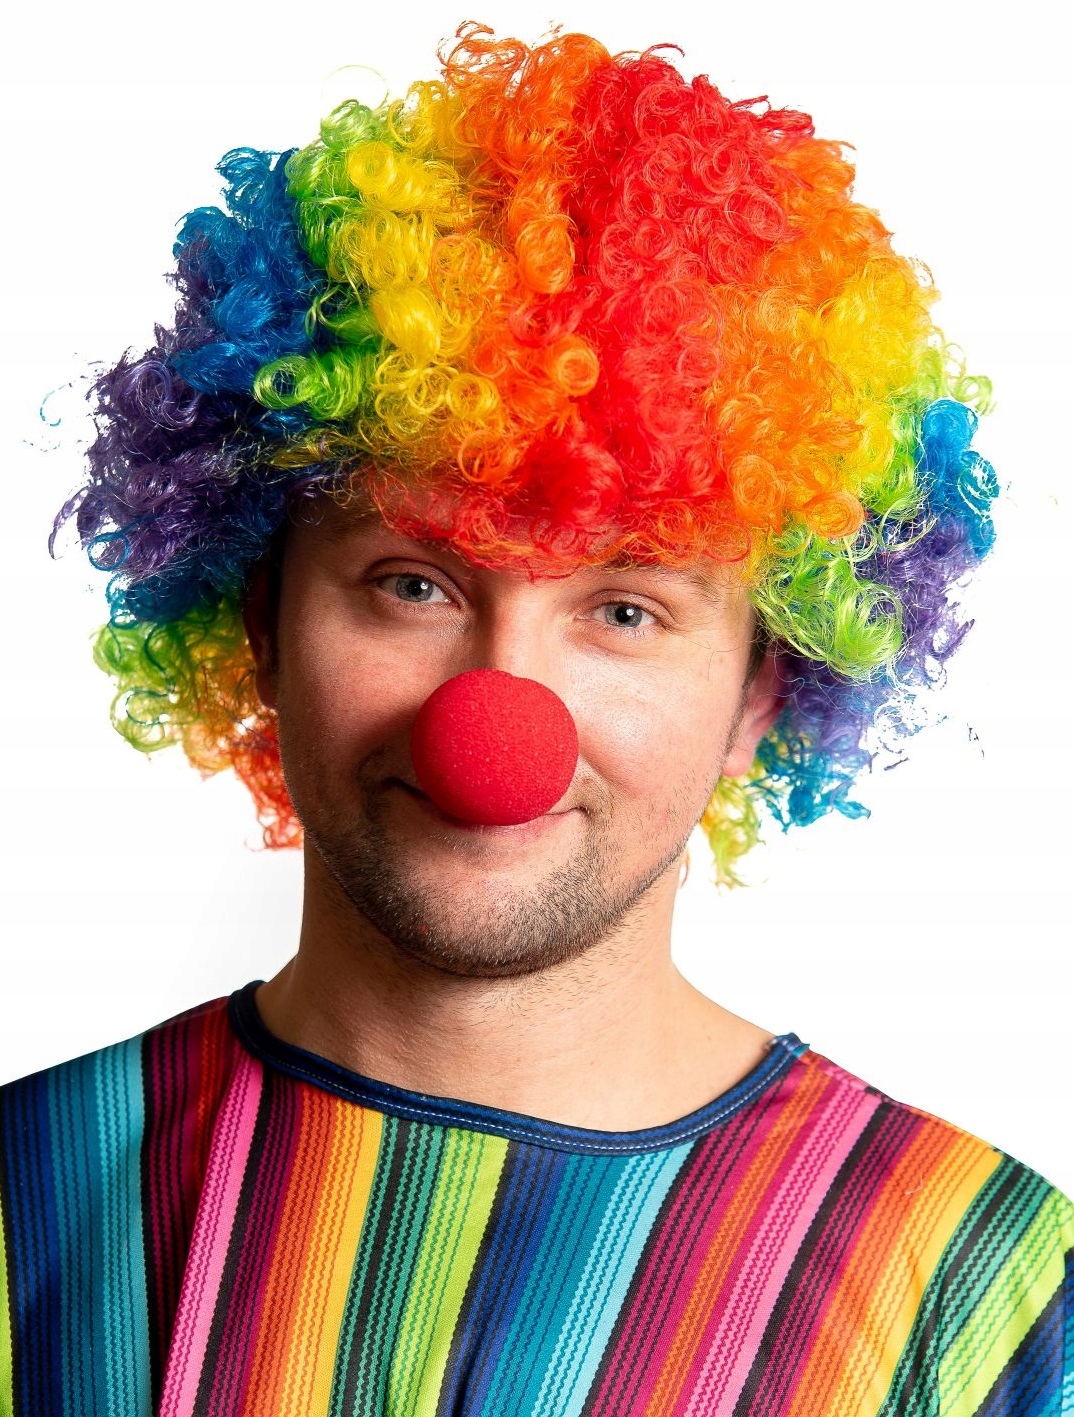 Клоуны цена. Парик клоуна. Парик клоуна разноцветный. Волосы клоуна. Клоун с разноцветными волосами.